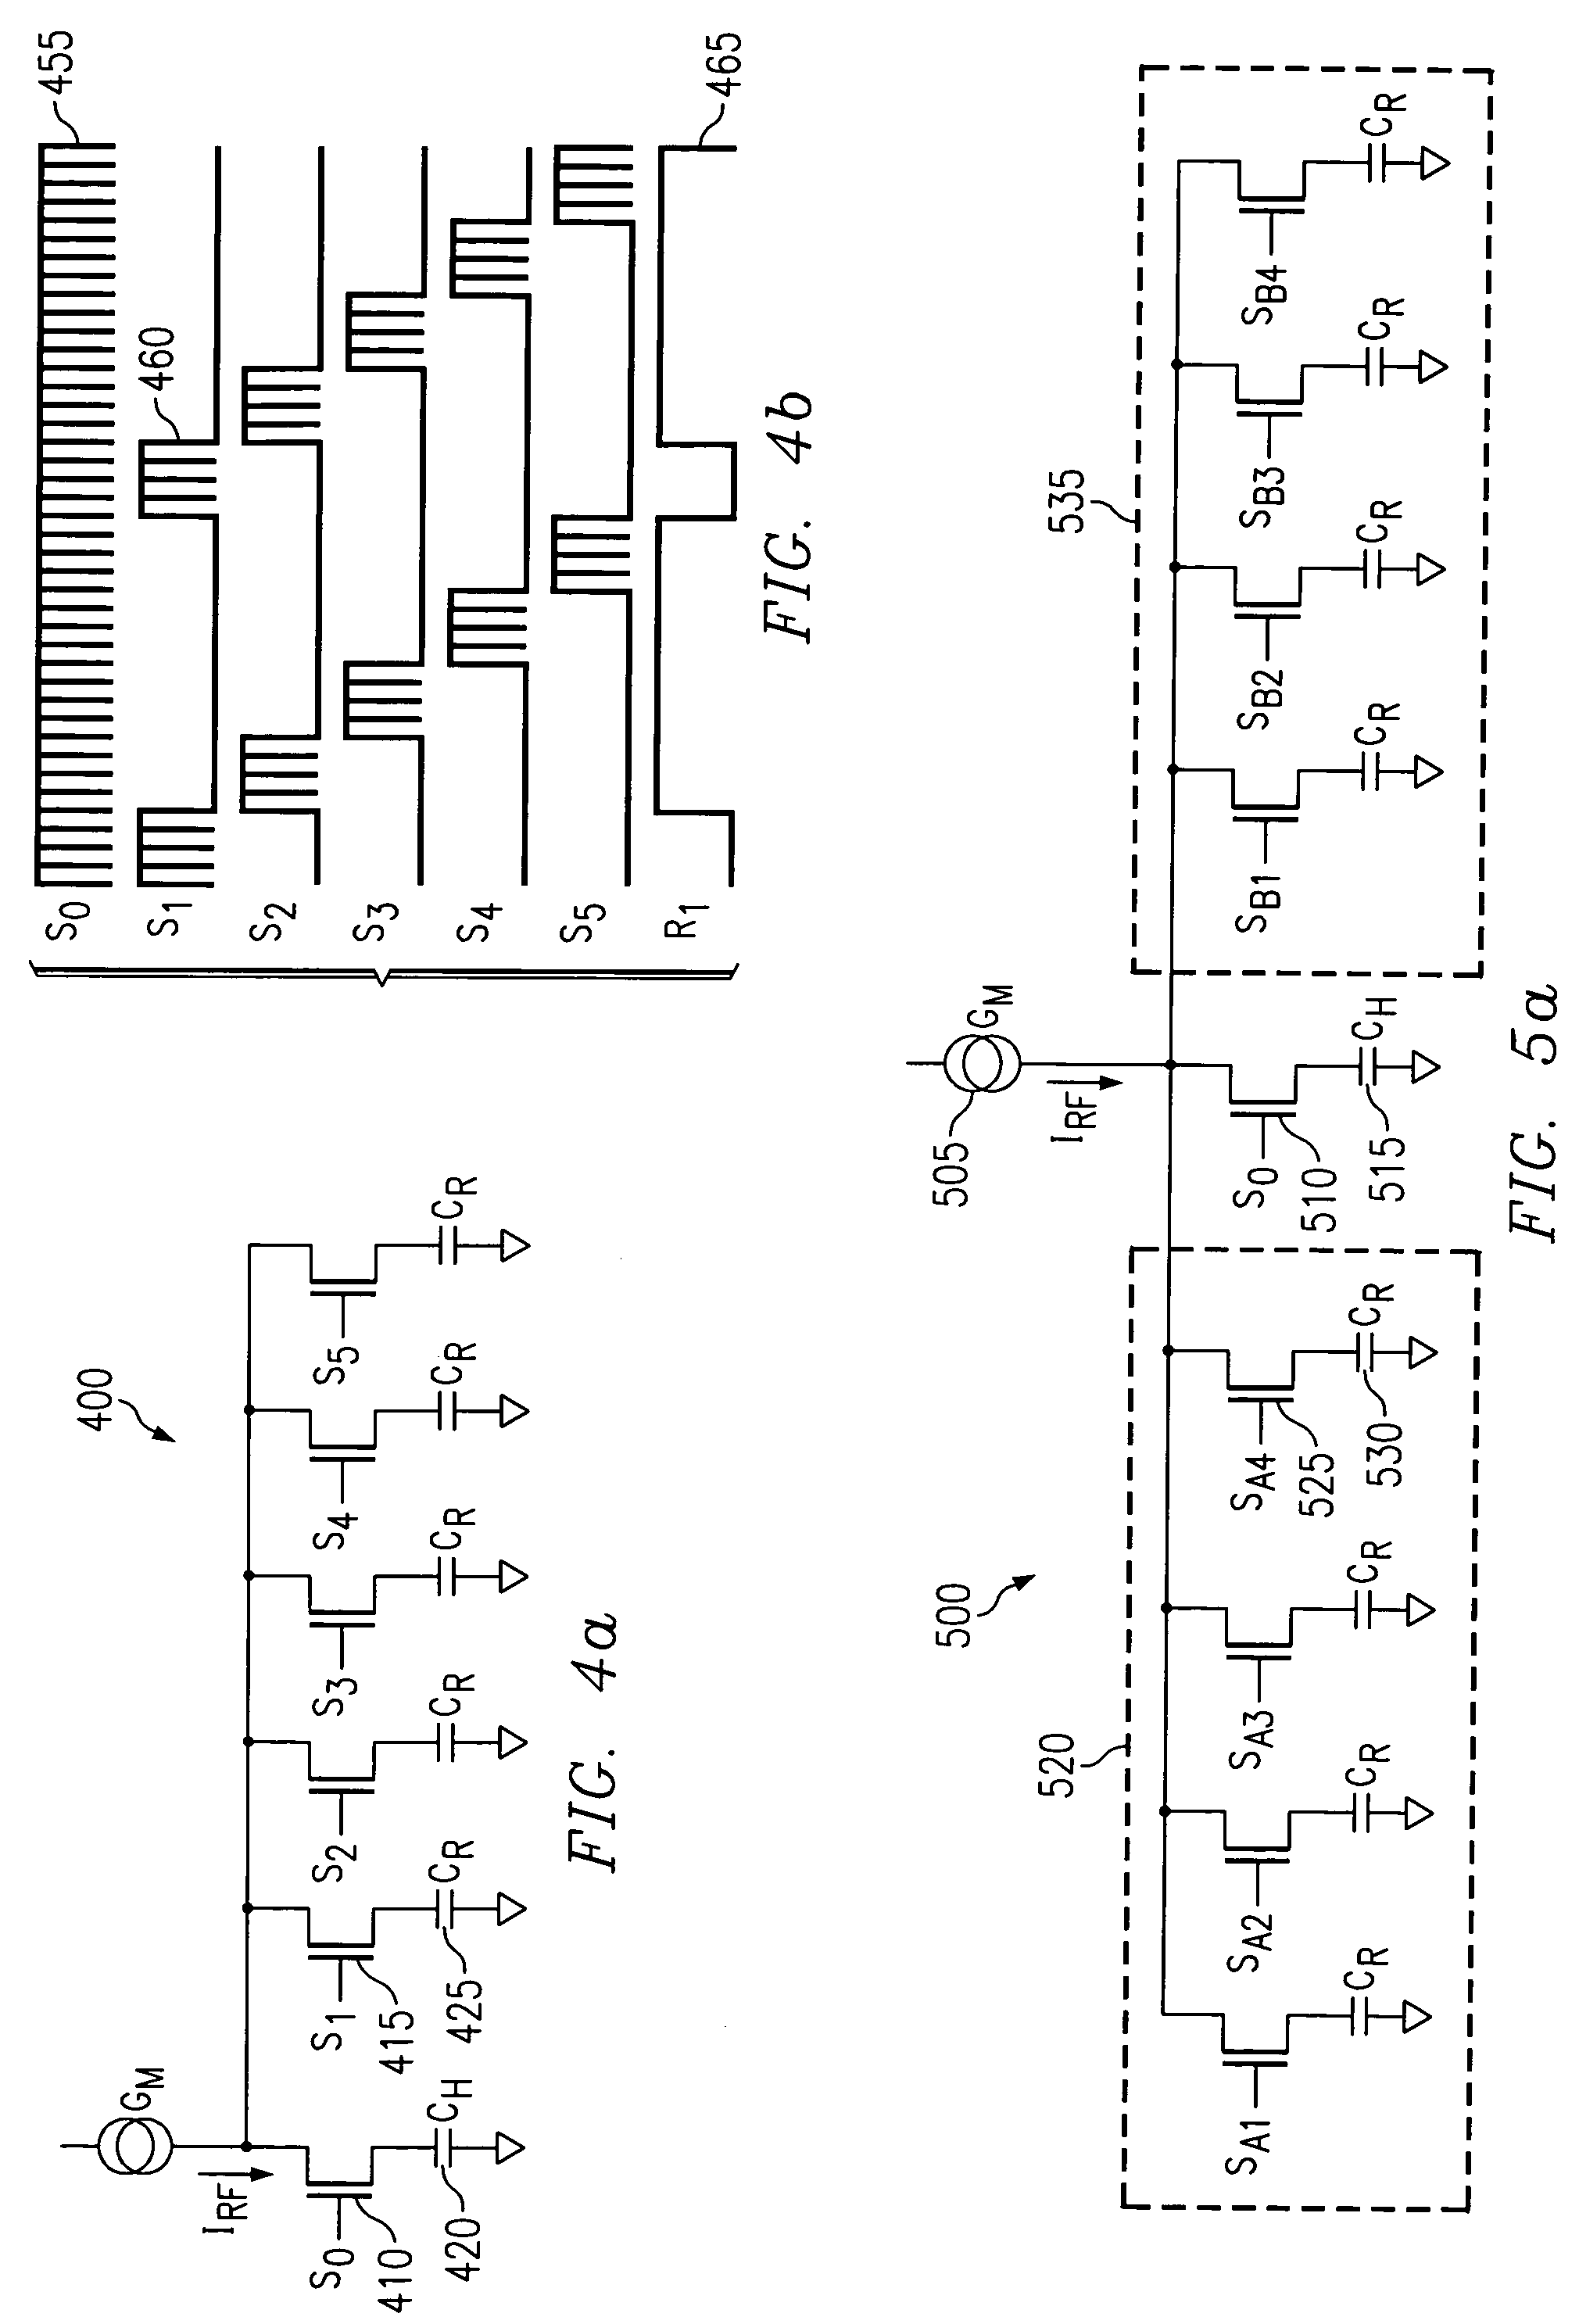 Sampling mixer with asynchronous clock and signal domains